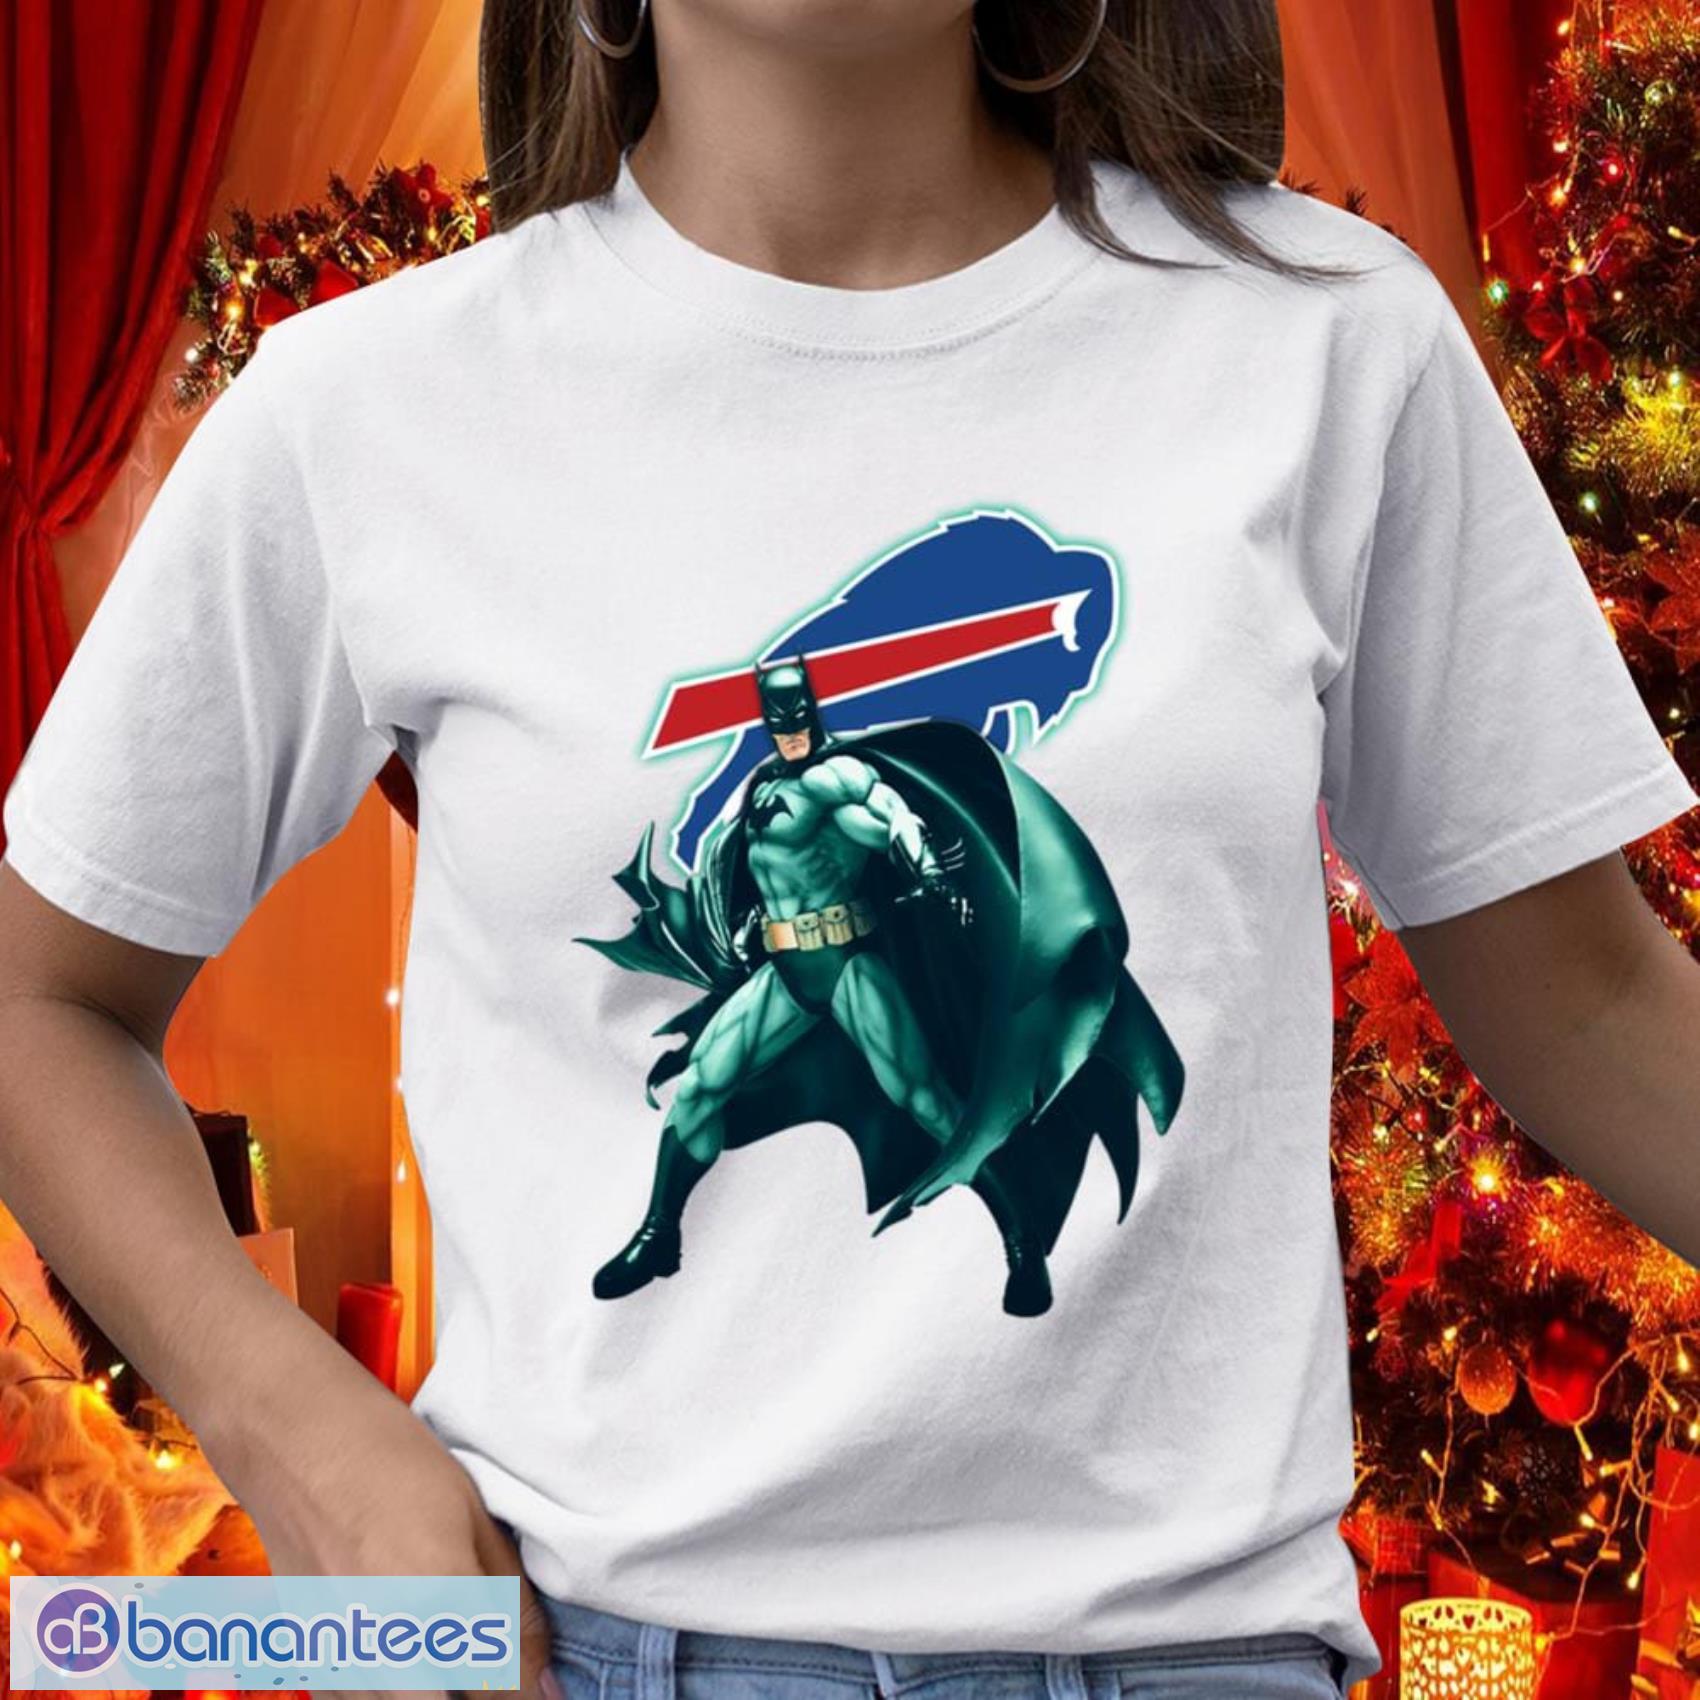 Buffalo-Bills Batman Dc T Shirt Gift For Sport Team's Fans - Buffalo-Bills Batman Dc T Shirt_1